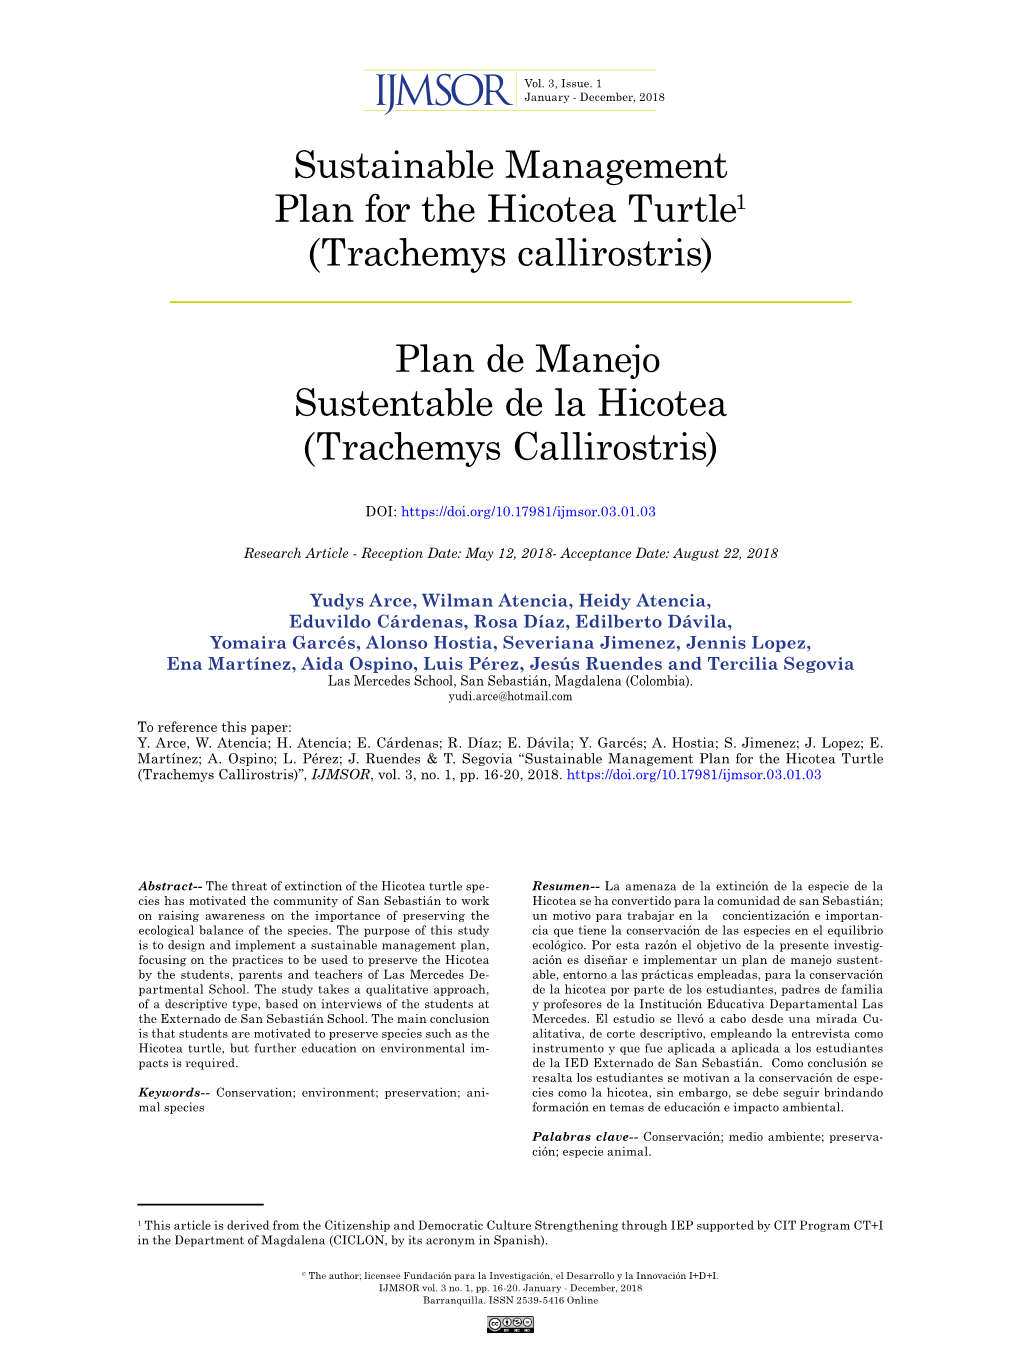 Sustainable Management Plan for the Hicotea Turtle1 (Trachemys Callirostris)